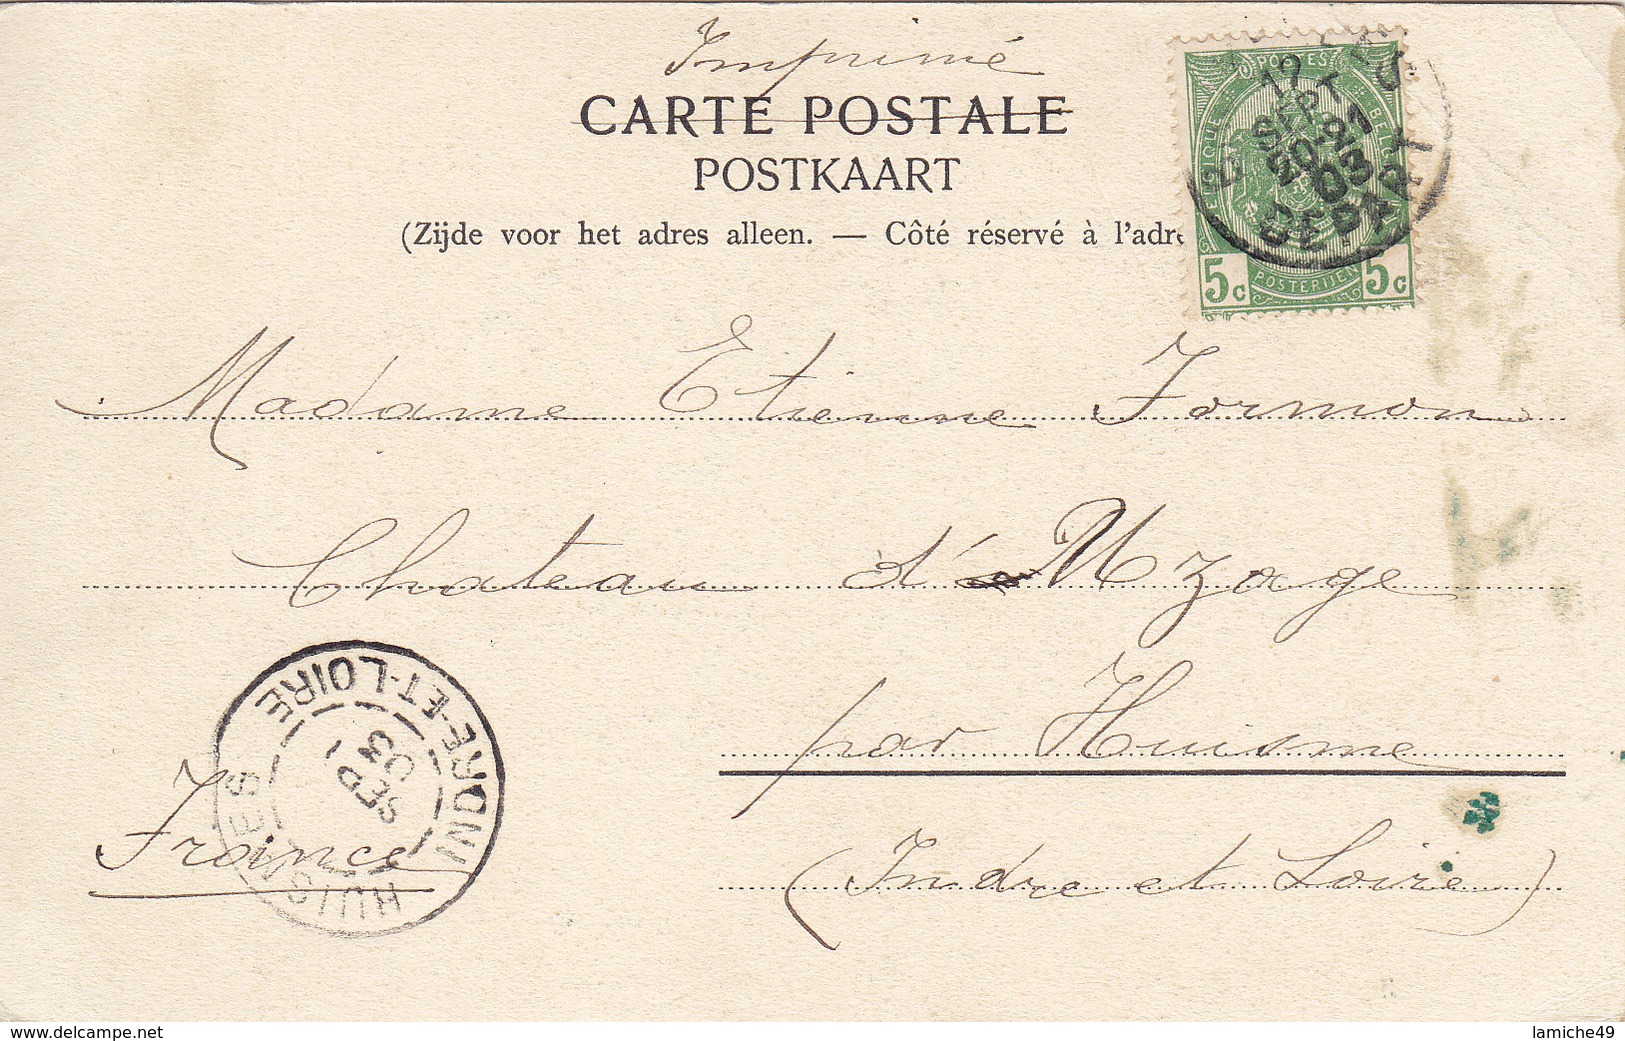 BRUXELLES - EGLISE STE CATHERINE CIRCULE TIMBRE 1903 - Mercati